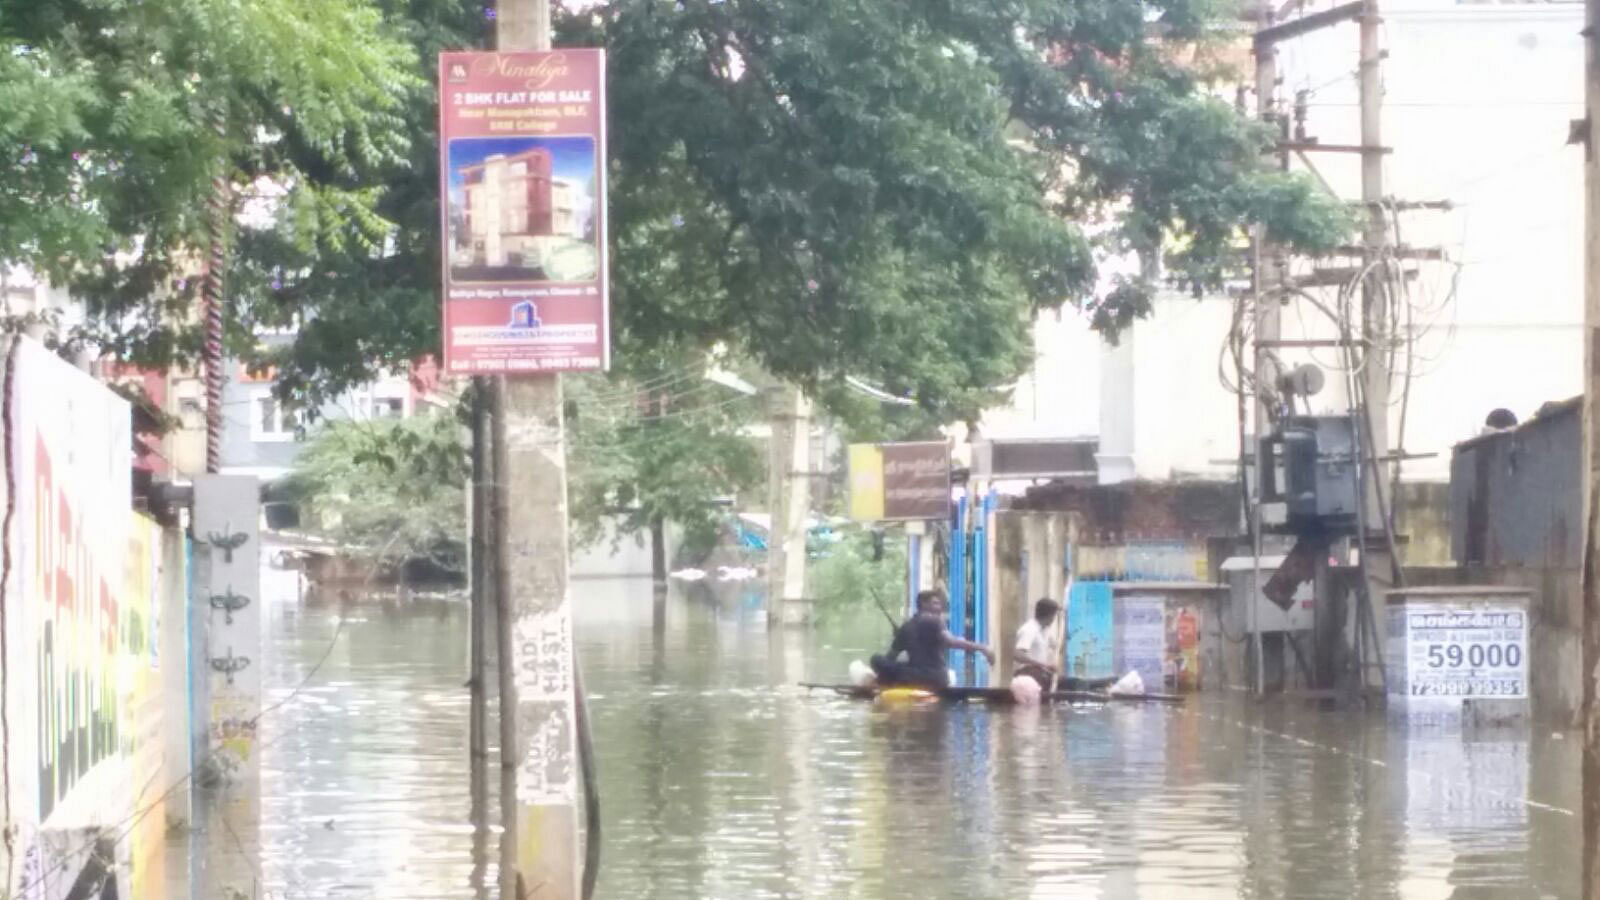 A flooded street in Chennai. (Photo Courtesy: Adhiraj Singh Samyal)